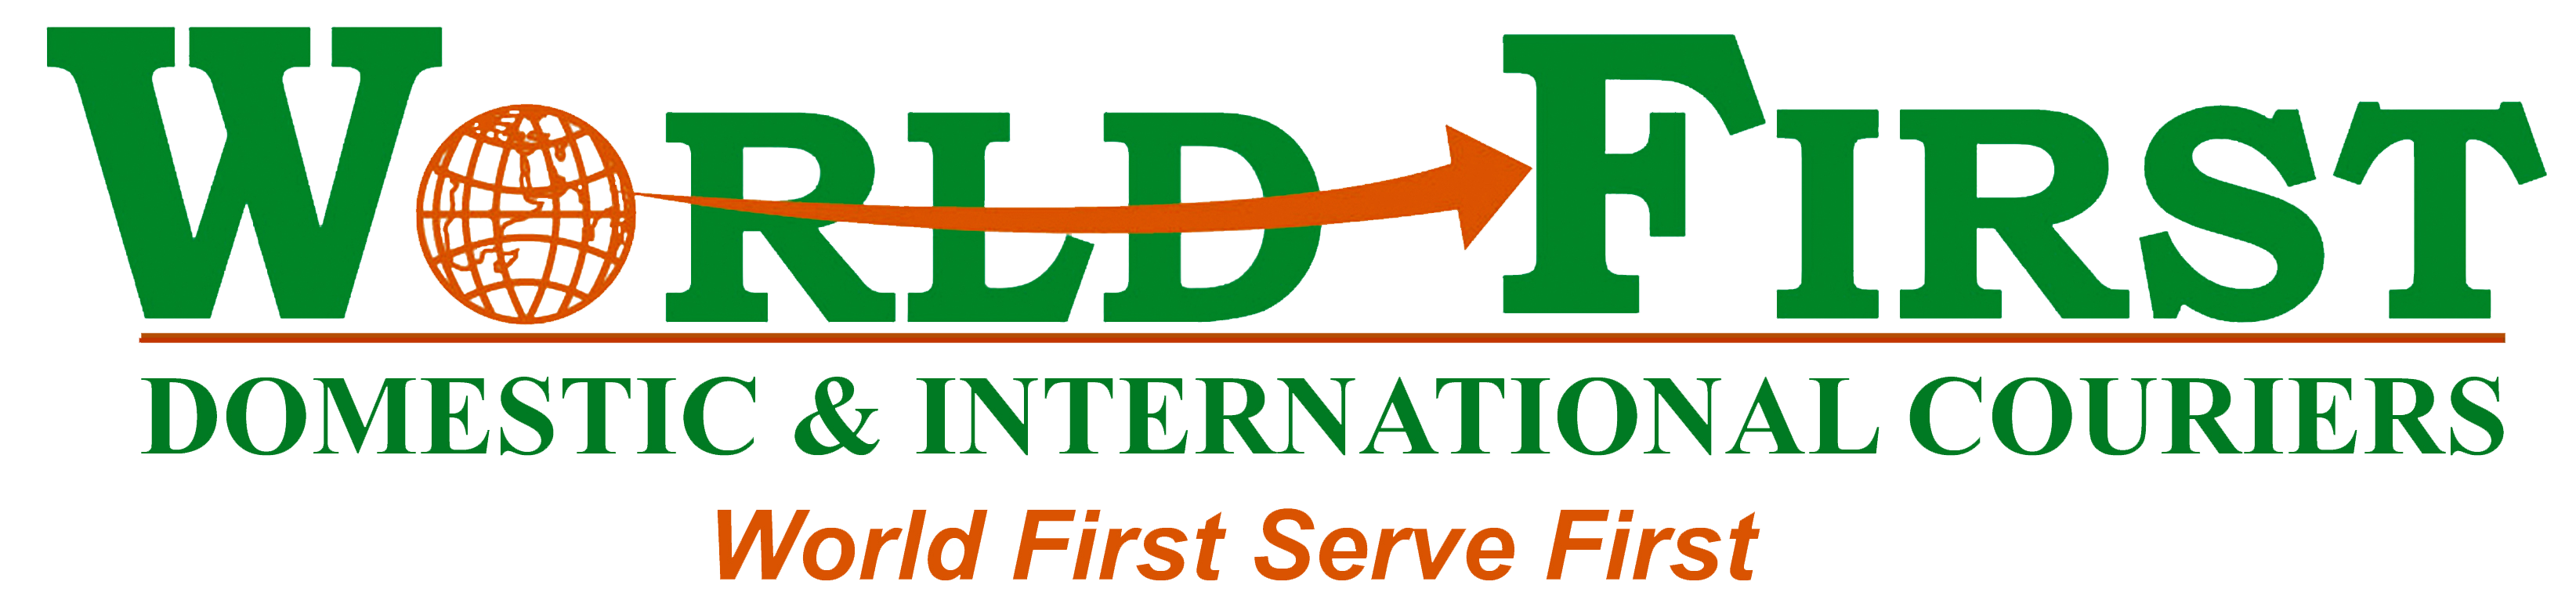 World First Courier - Logo